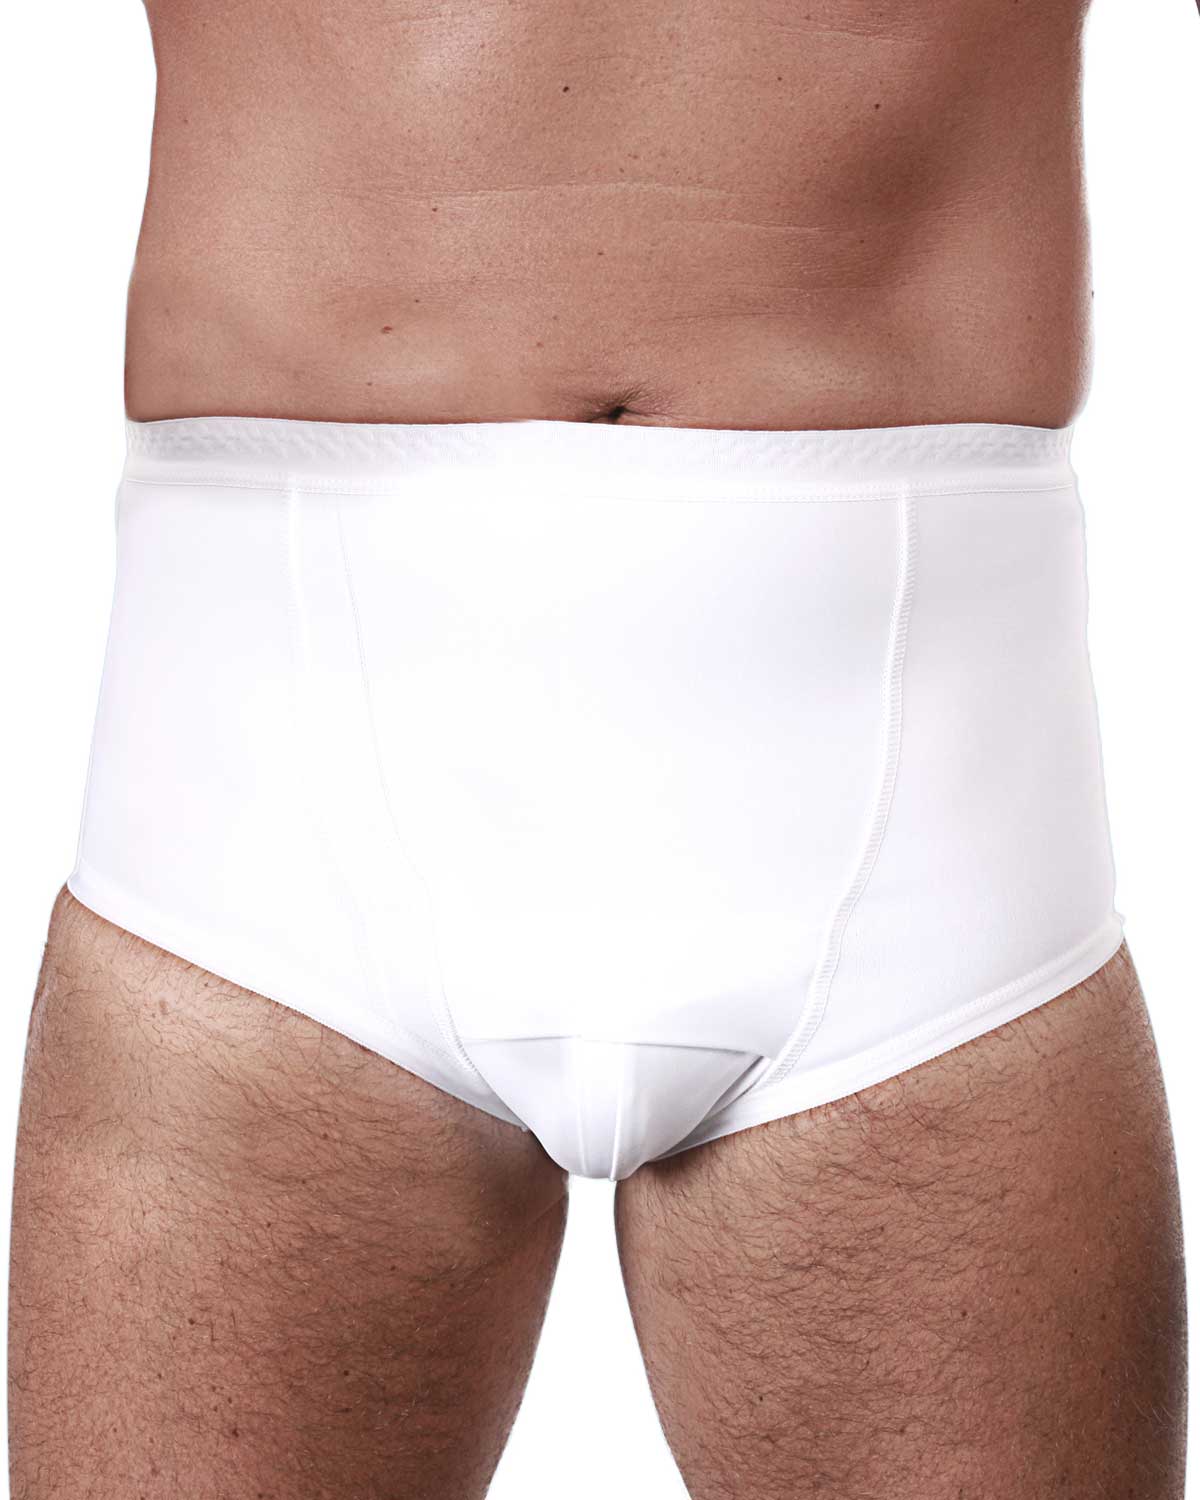 Ostomy Support Underwear – CUI Wear